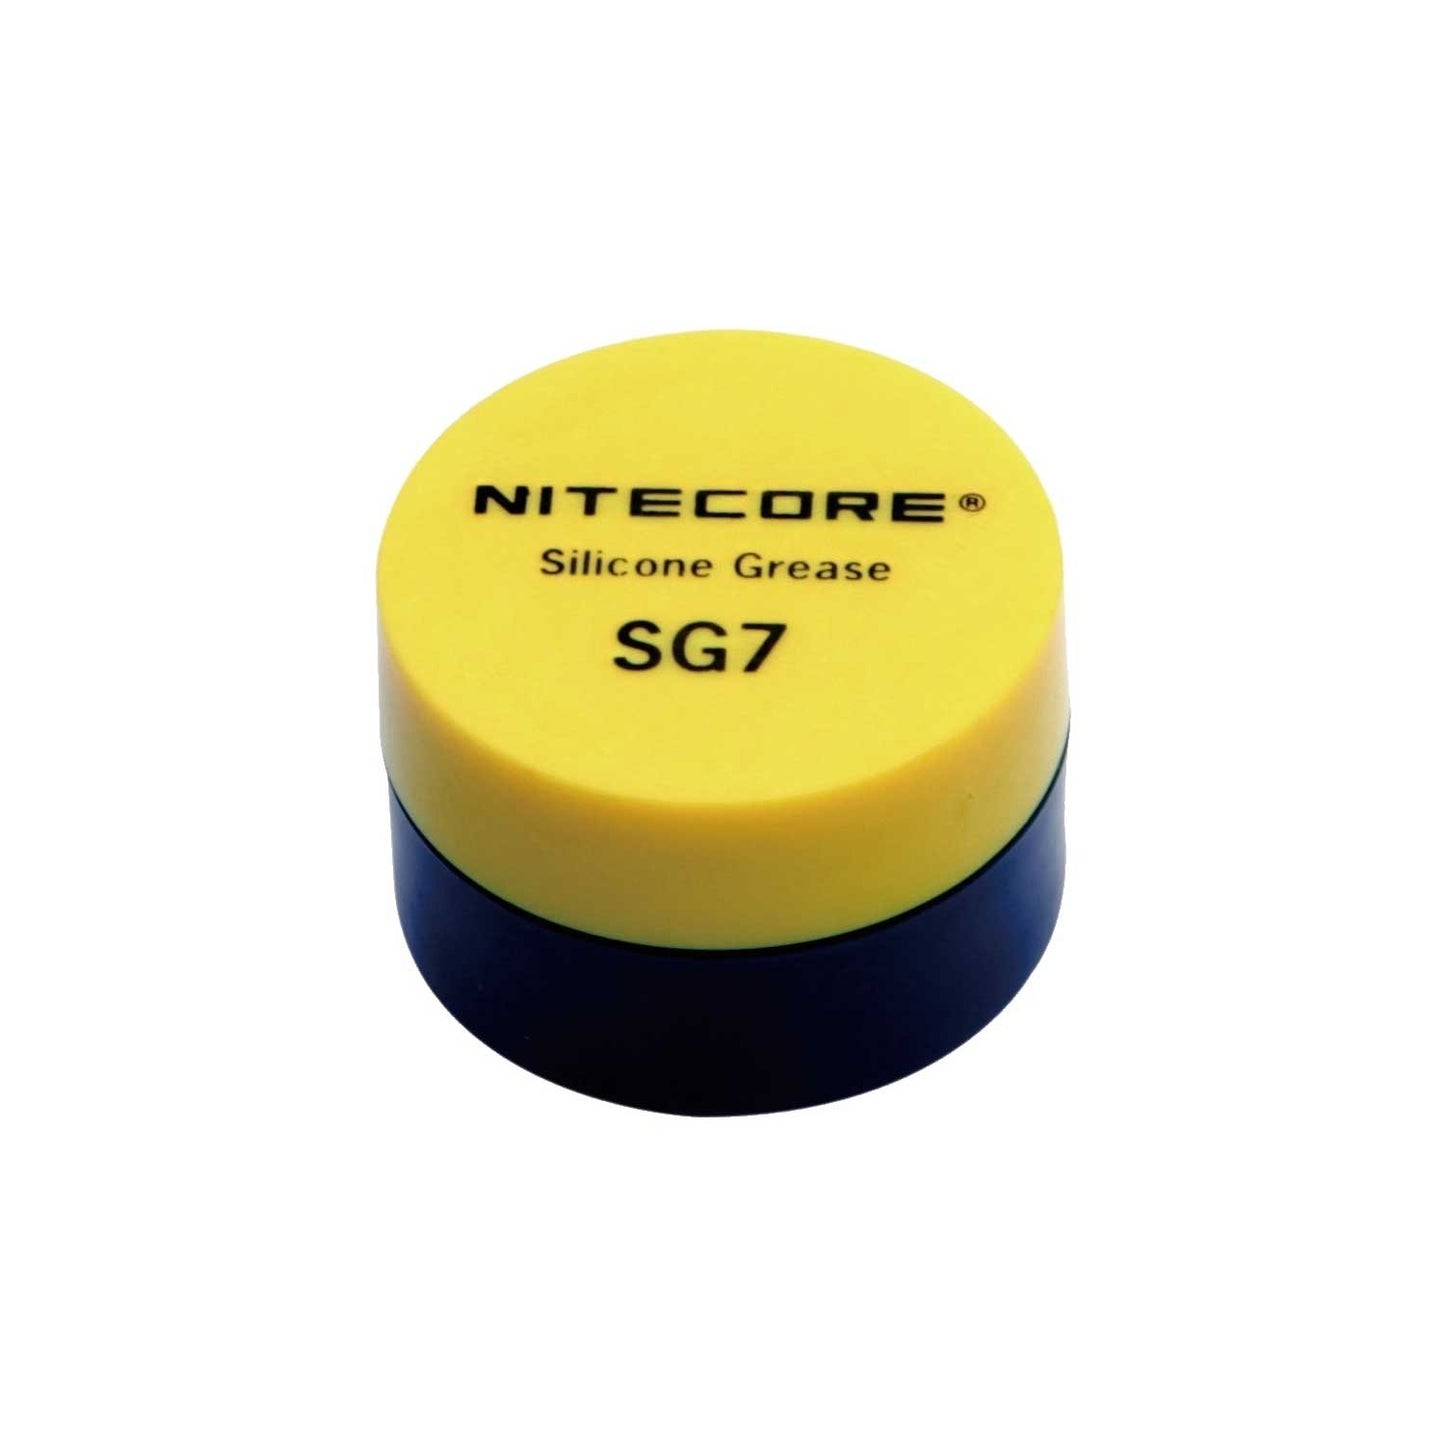 Nitecore Silicone Grease SG7 for Flashlights Maintenance